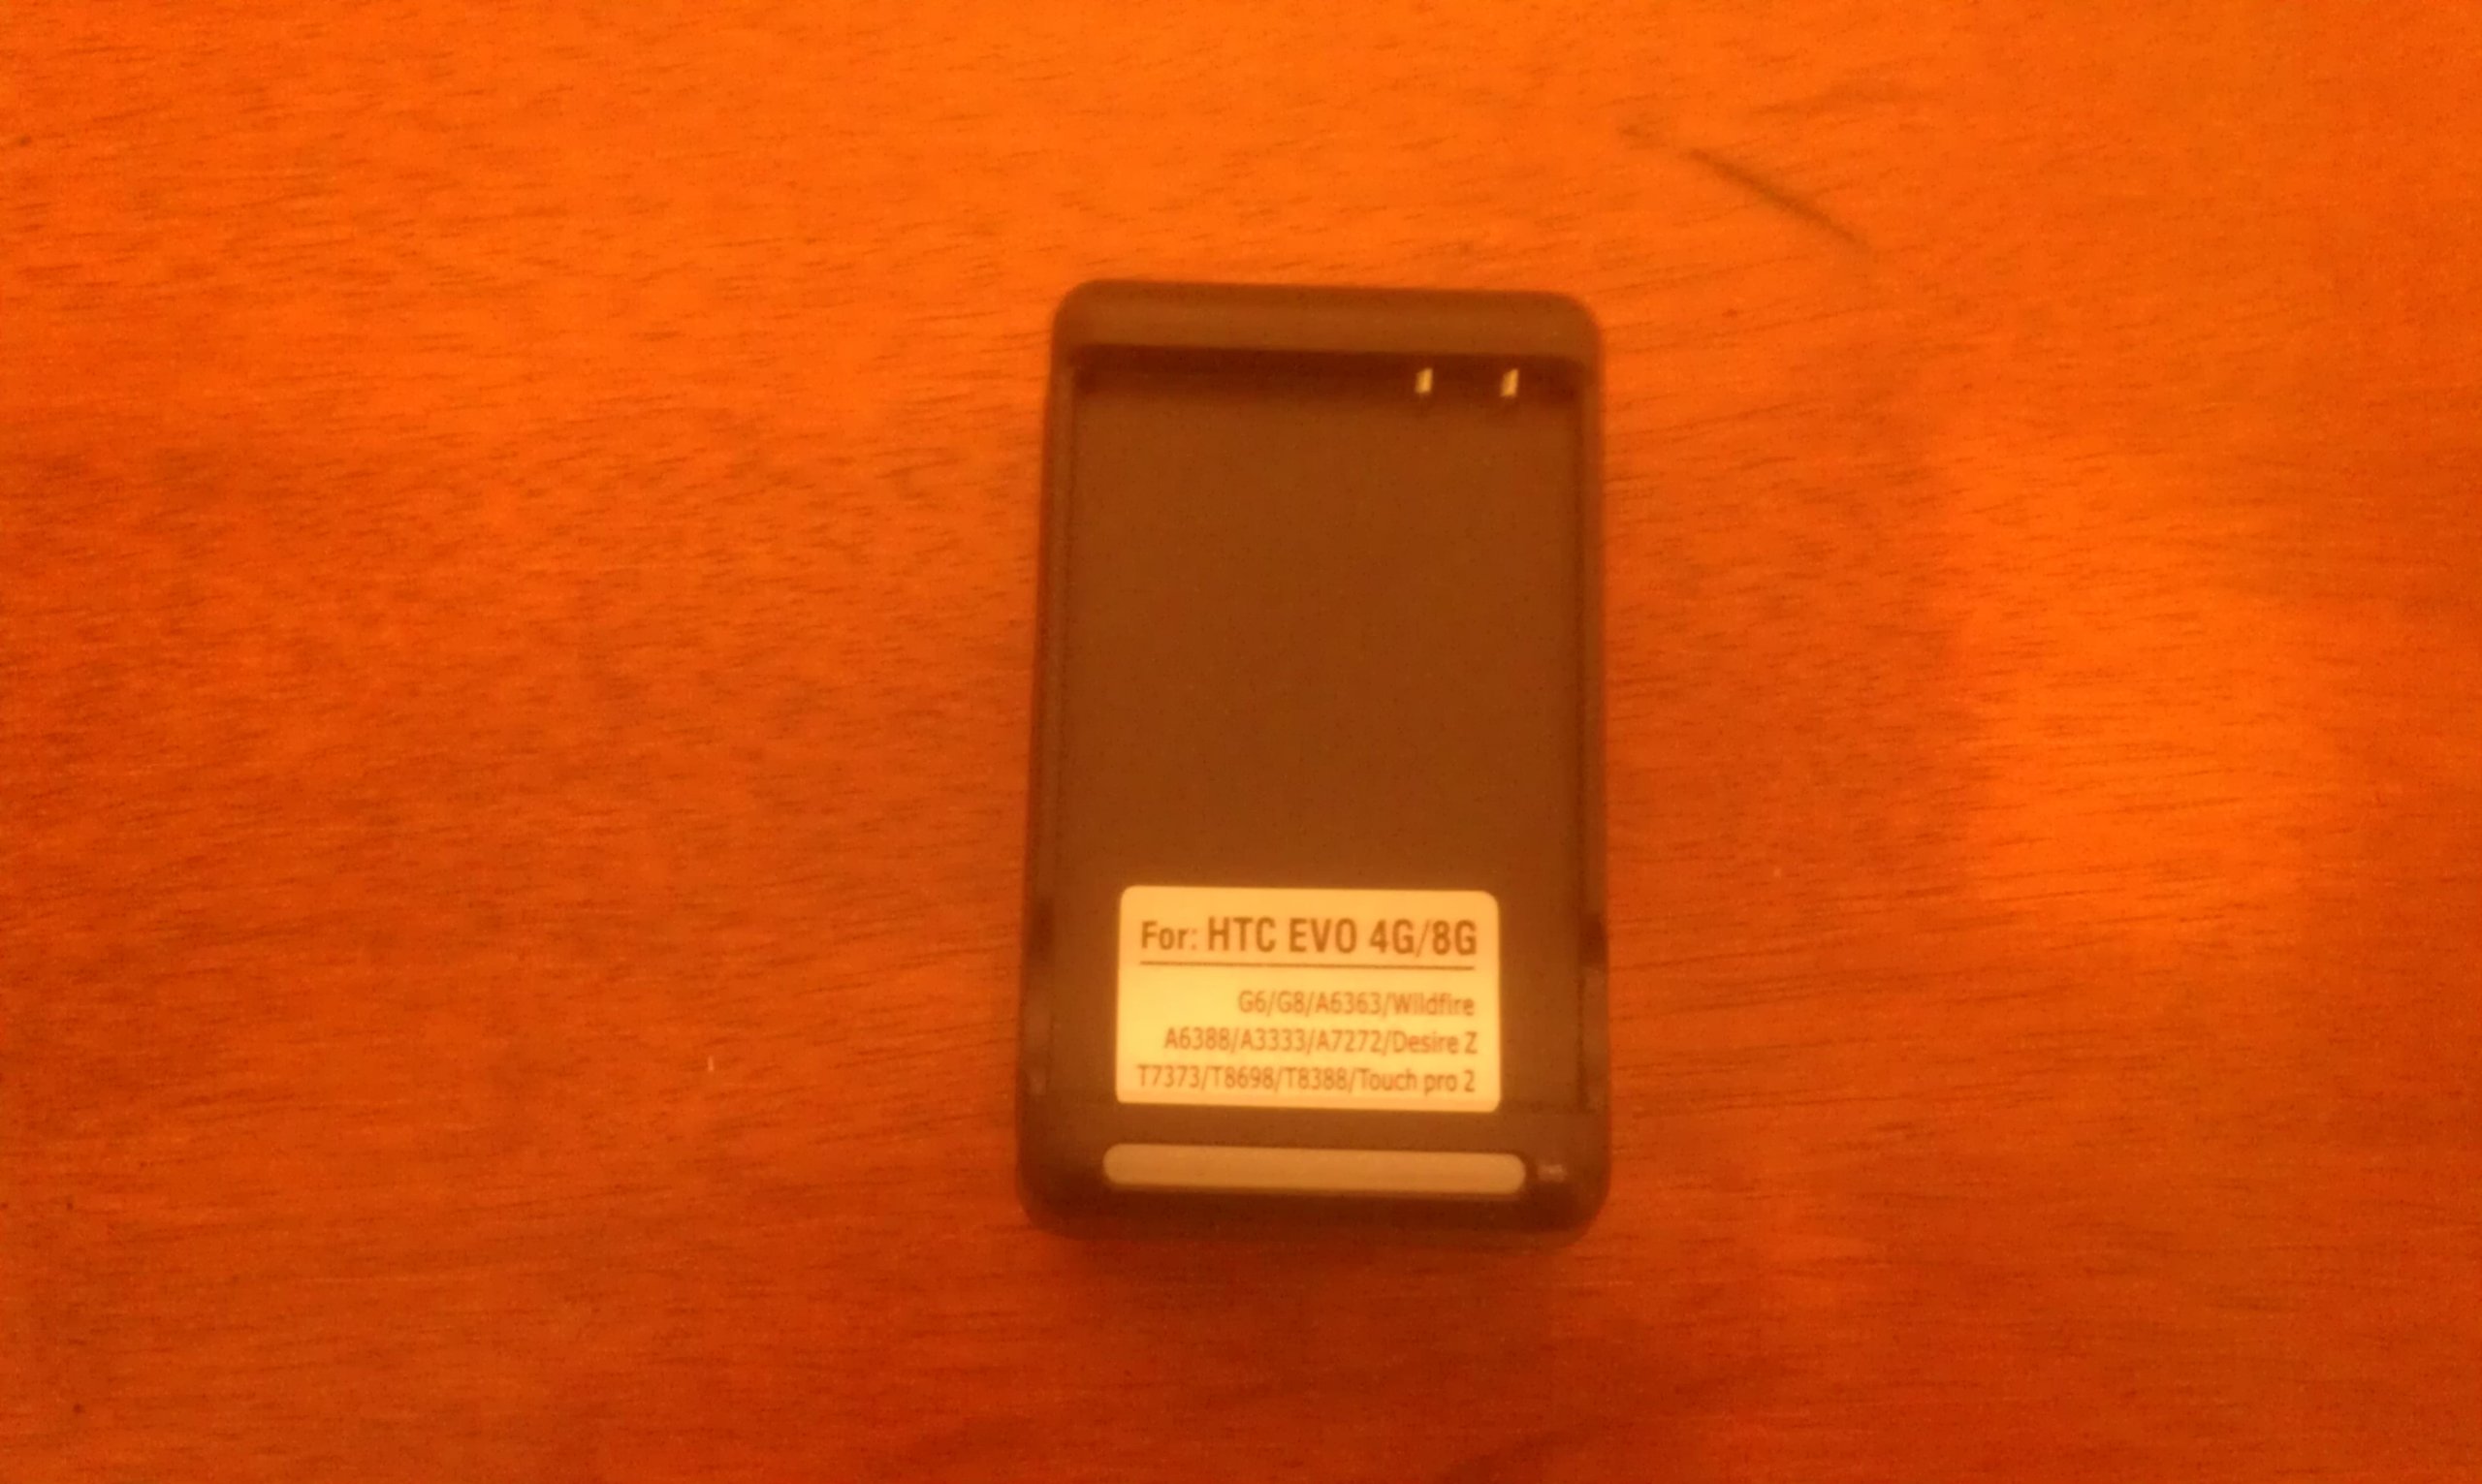 HTC EVO Design SL892 Android Phone (Boost Mobile) Evo Design 4G by HTC (Boost)‎